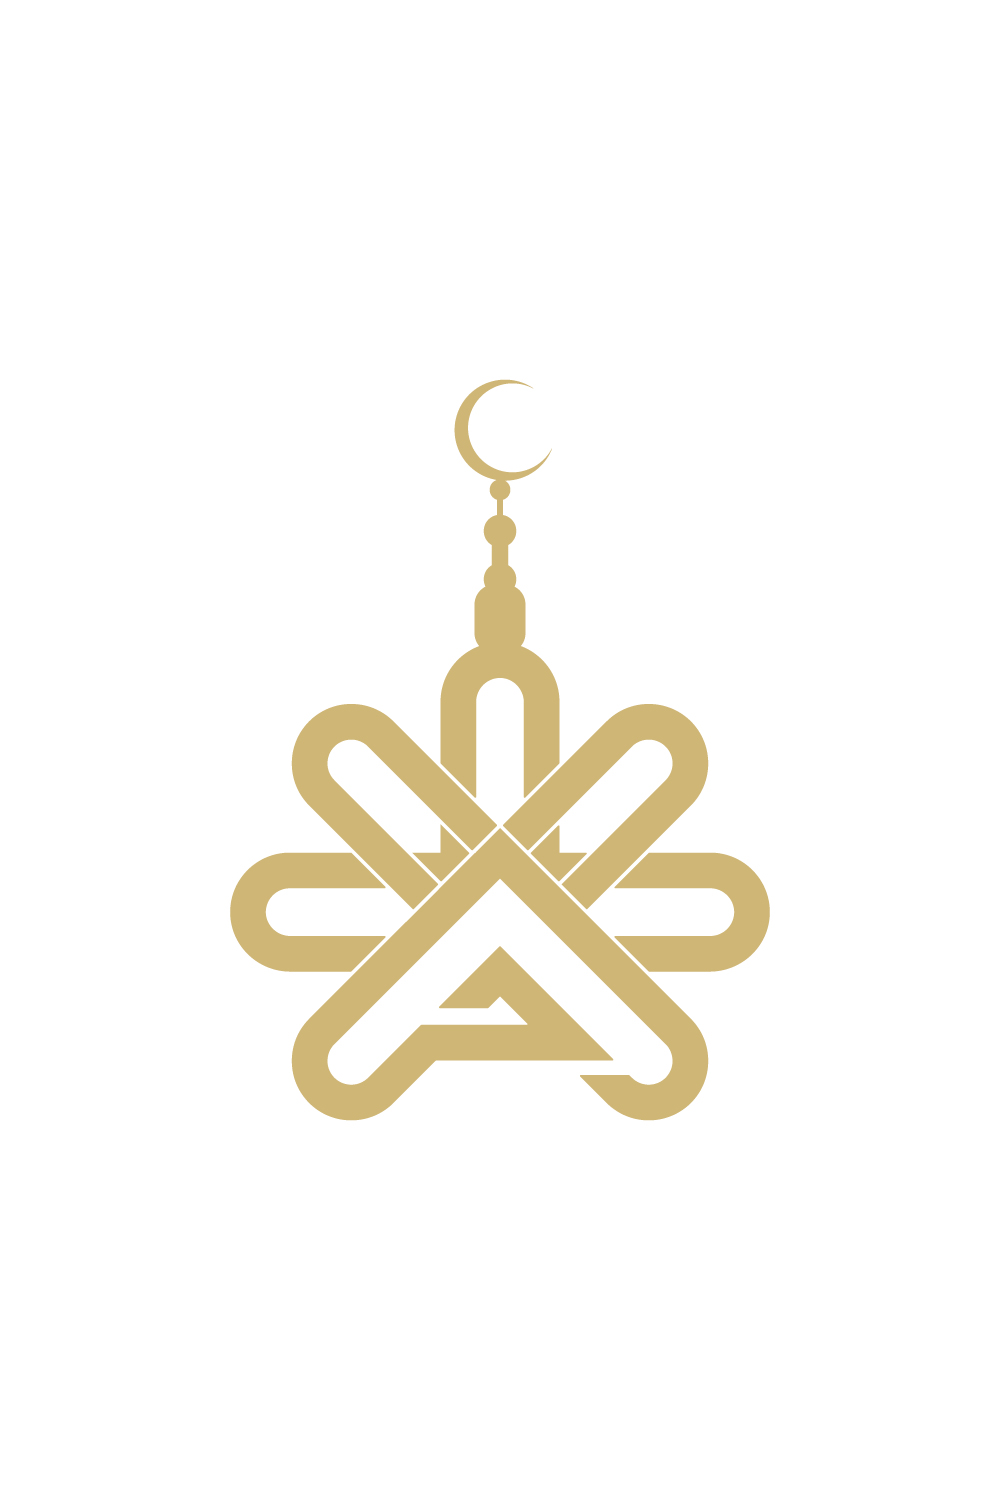 Eid Mubarak logo design vector images Mosque logo design template images A letter logo design vector icon A Islamic logo design pinterest preview image.